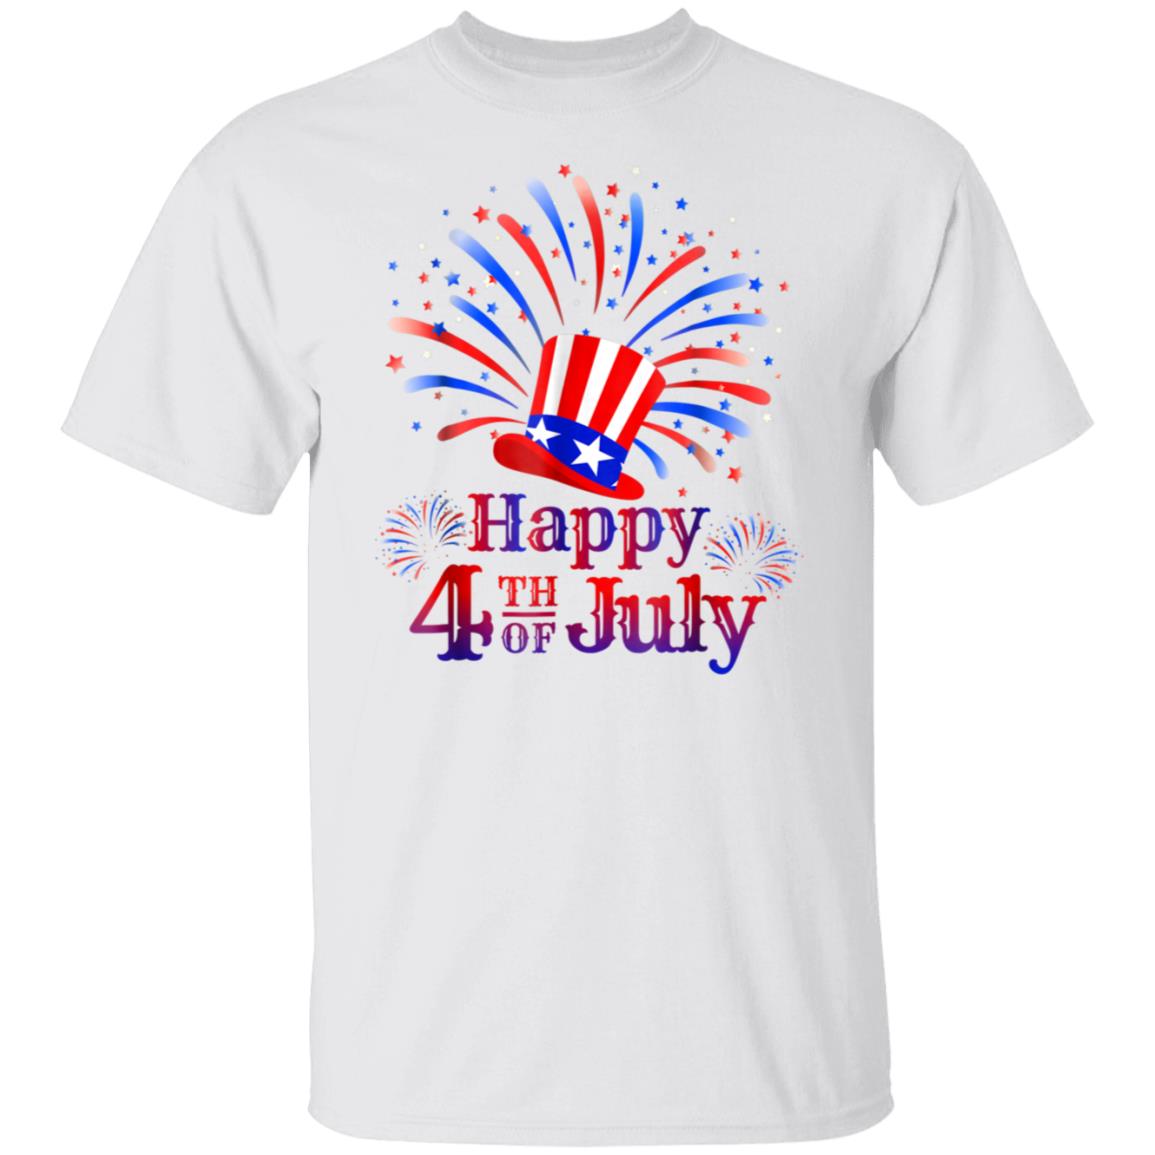 Happy 4th of July America T-shirt Celebrating Freedom